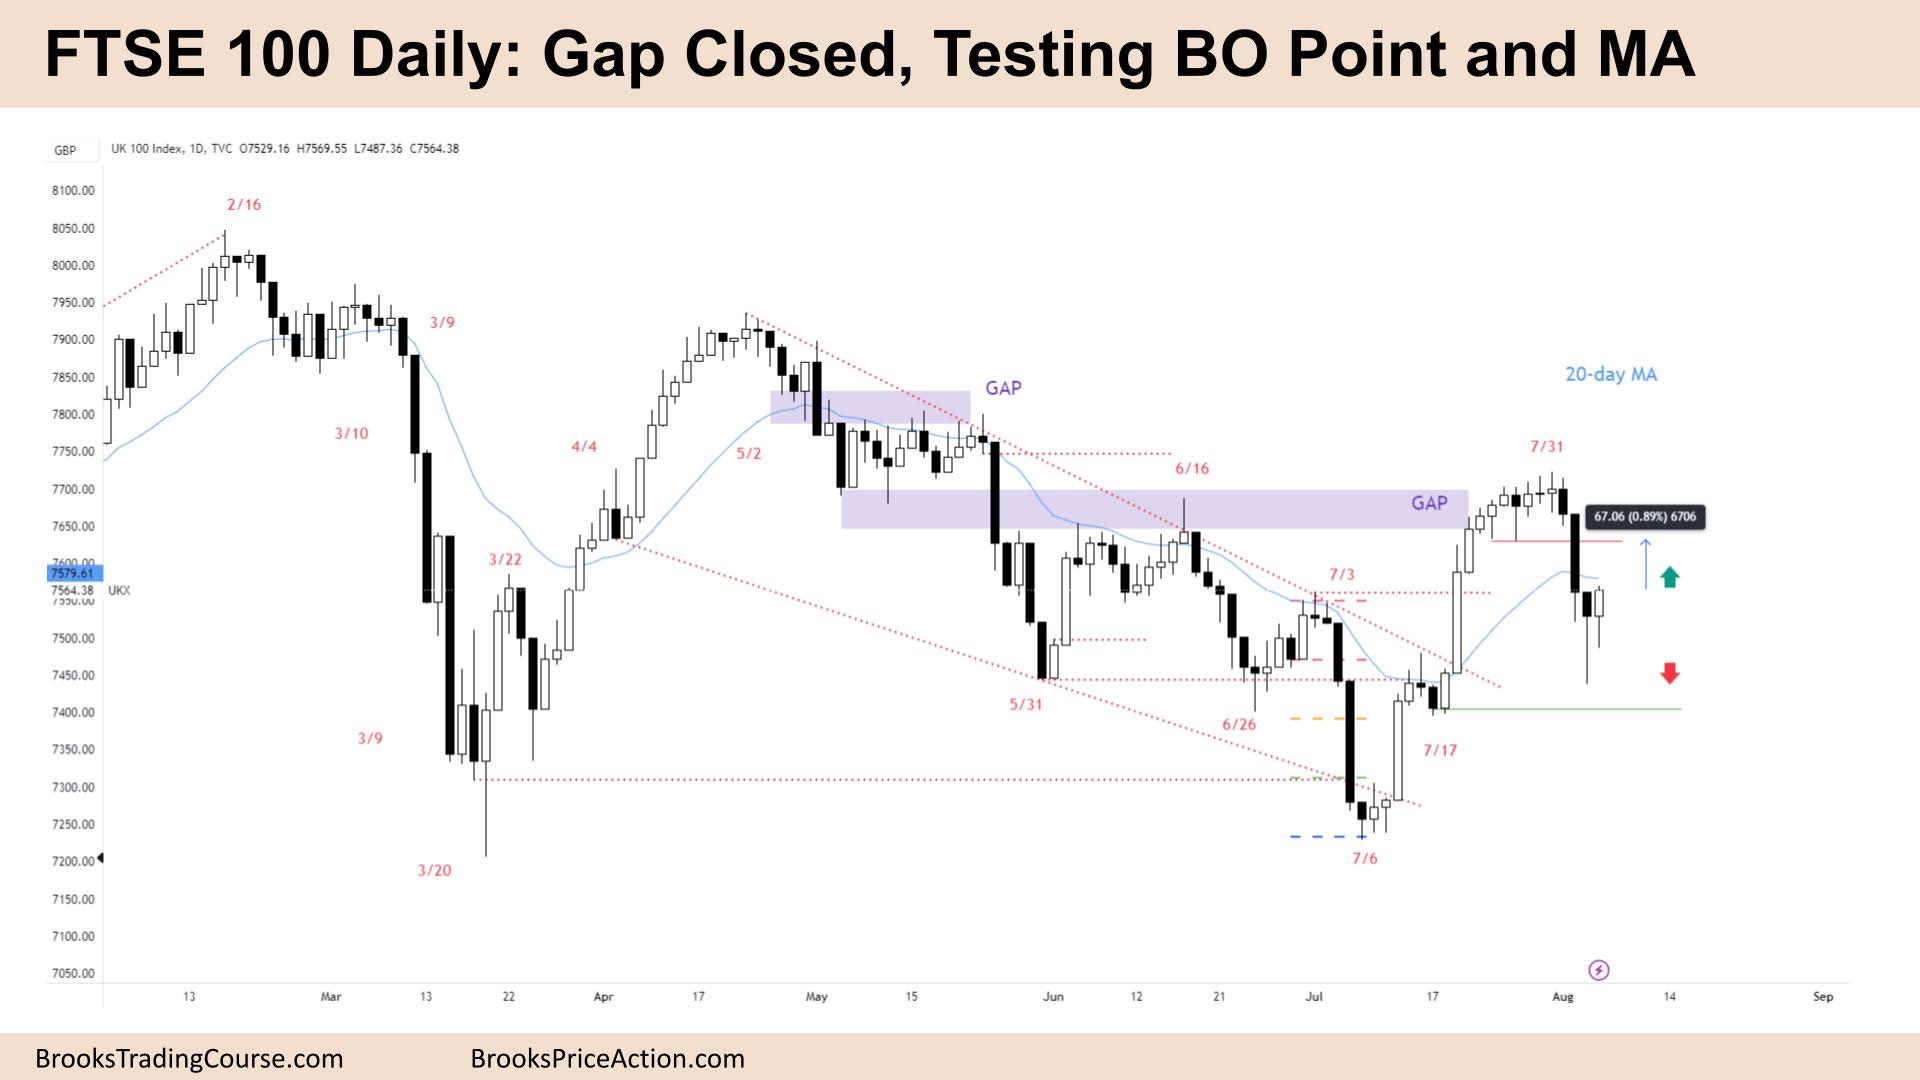 FTSE 100 Gap Closed, Testing BO Point and MA